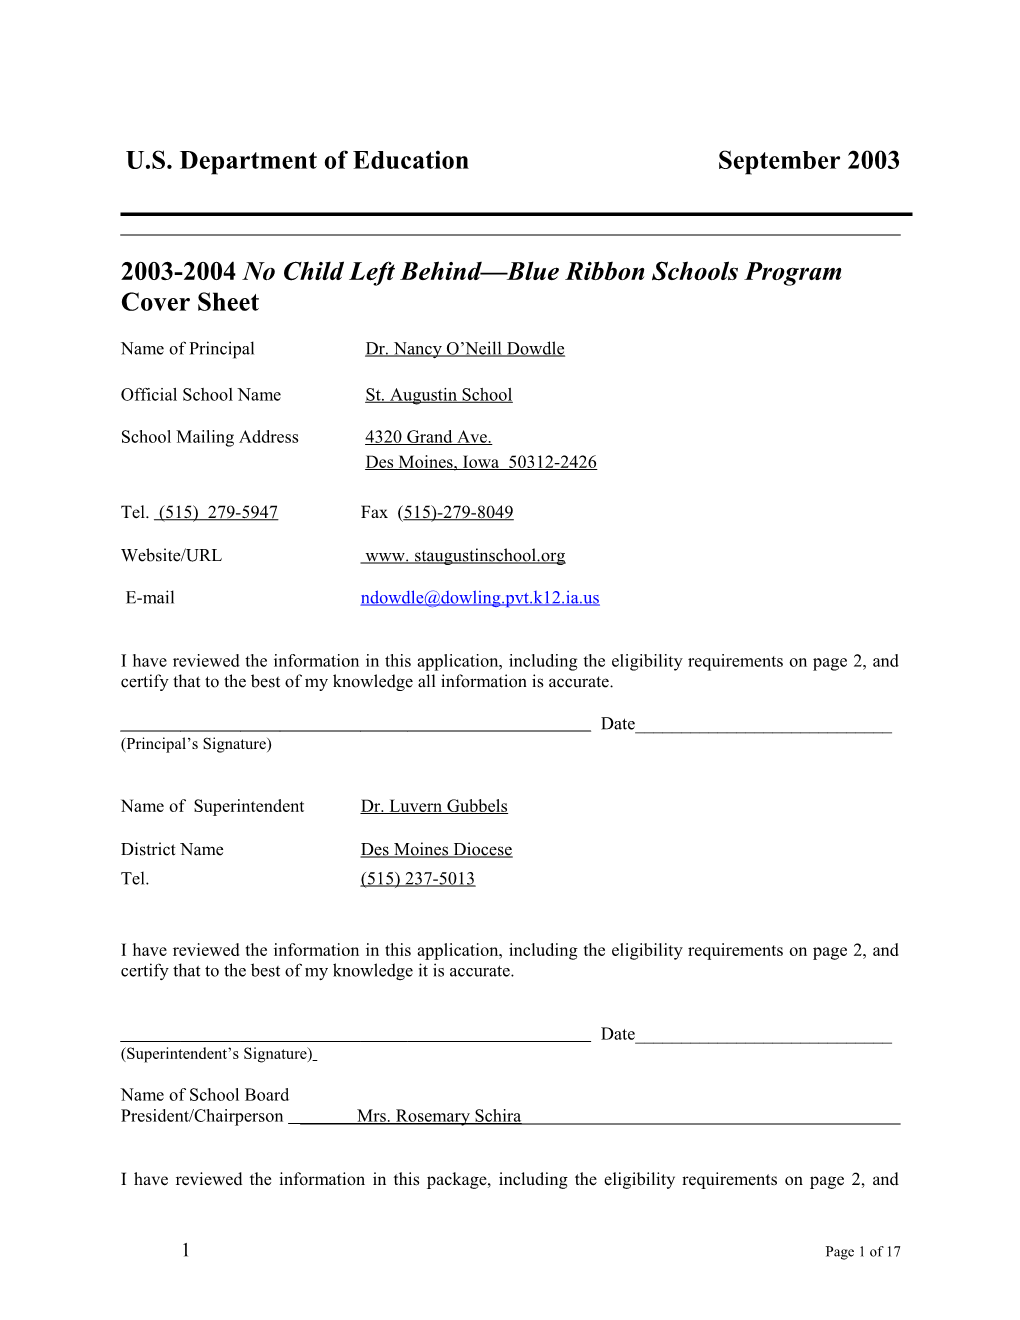 St. Augustin School 2004 No Child Left Behind-Blue Ribbon School Application (Msword)